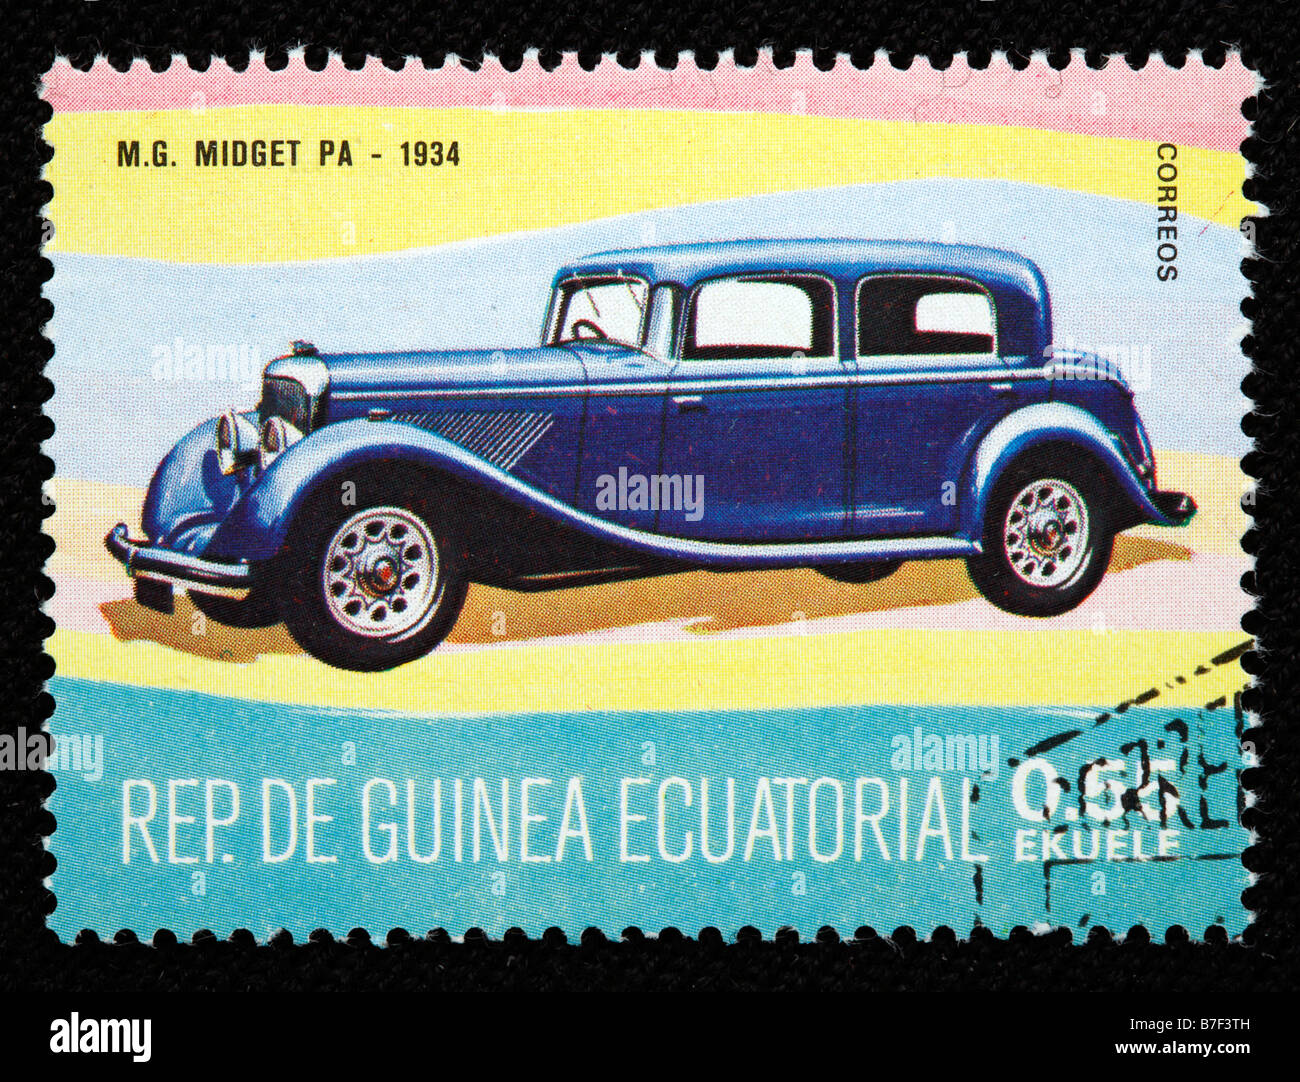 Geschichte des Verkehrs, Auto Midget PA (1934), Briefmarke, Äquatorial-Guinea Stockfoto